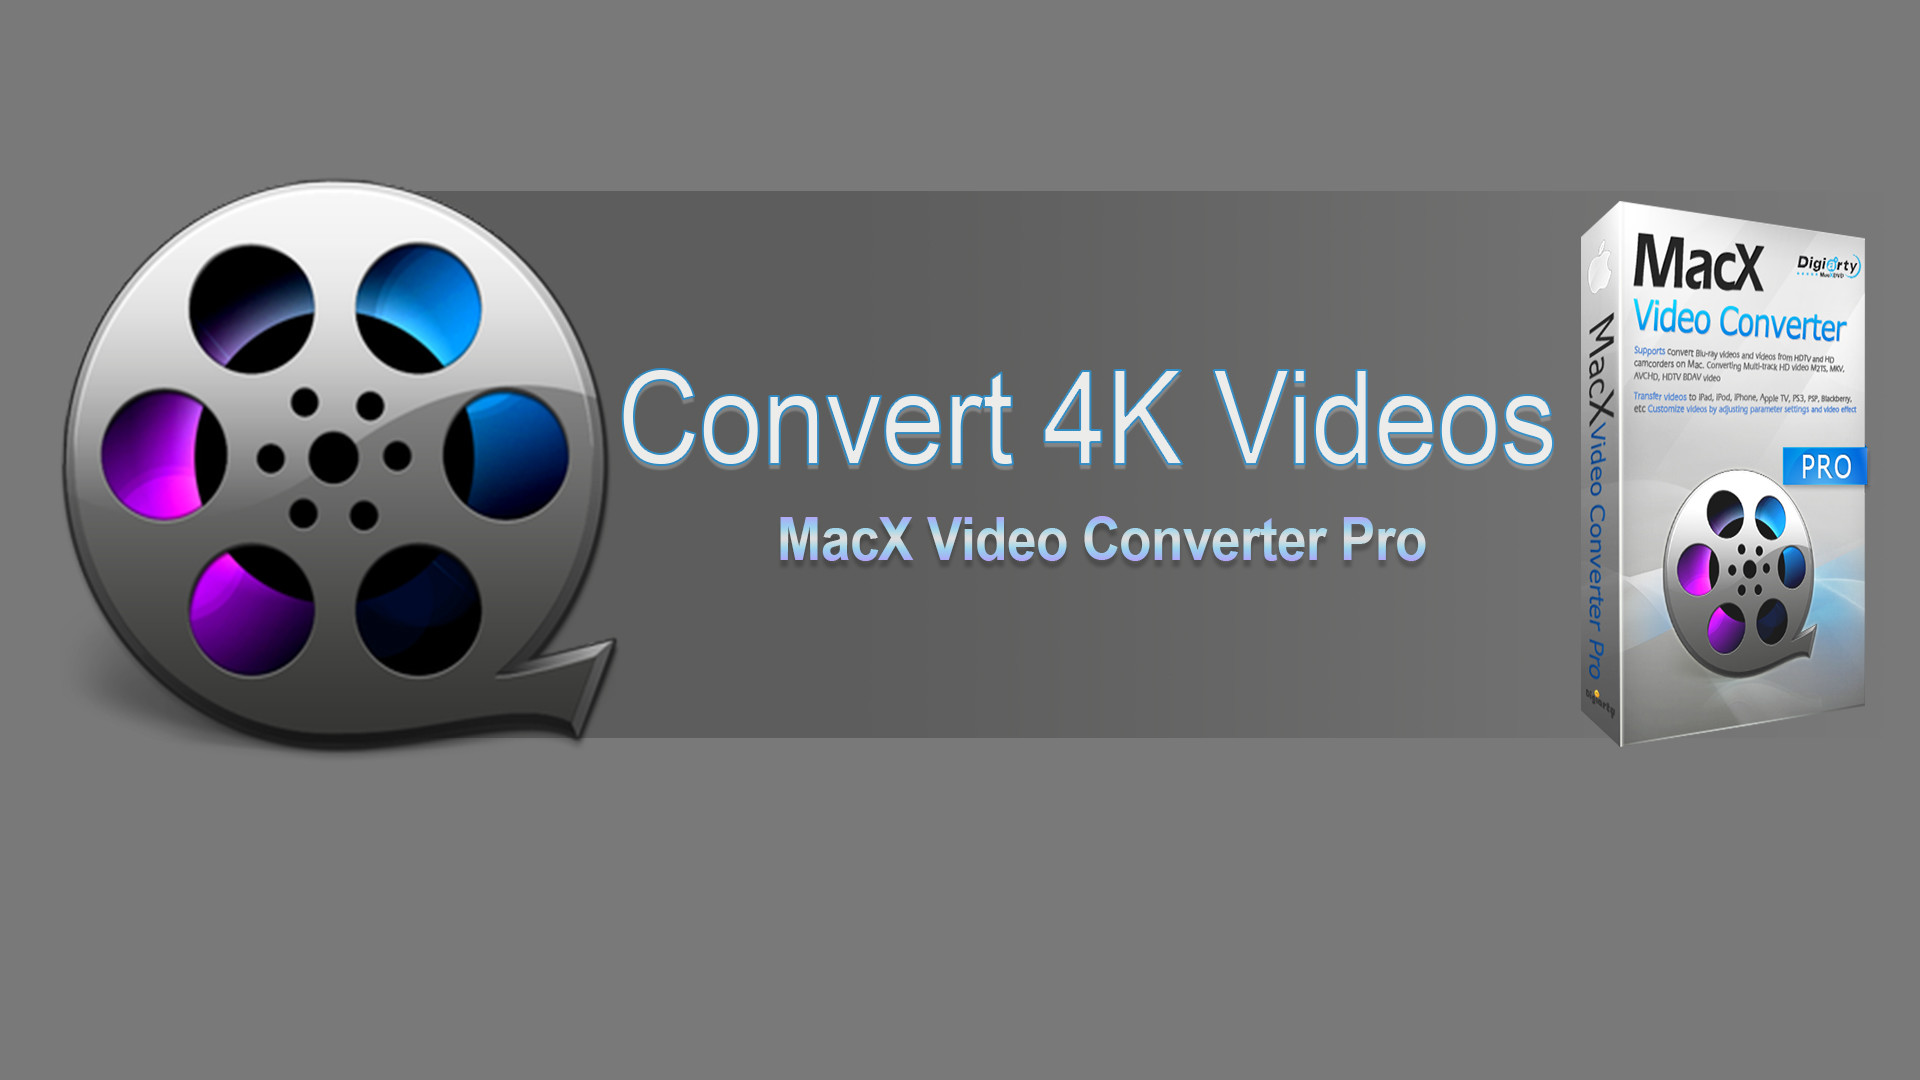 reviews of macx video converter pro